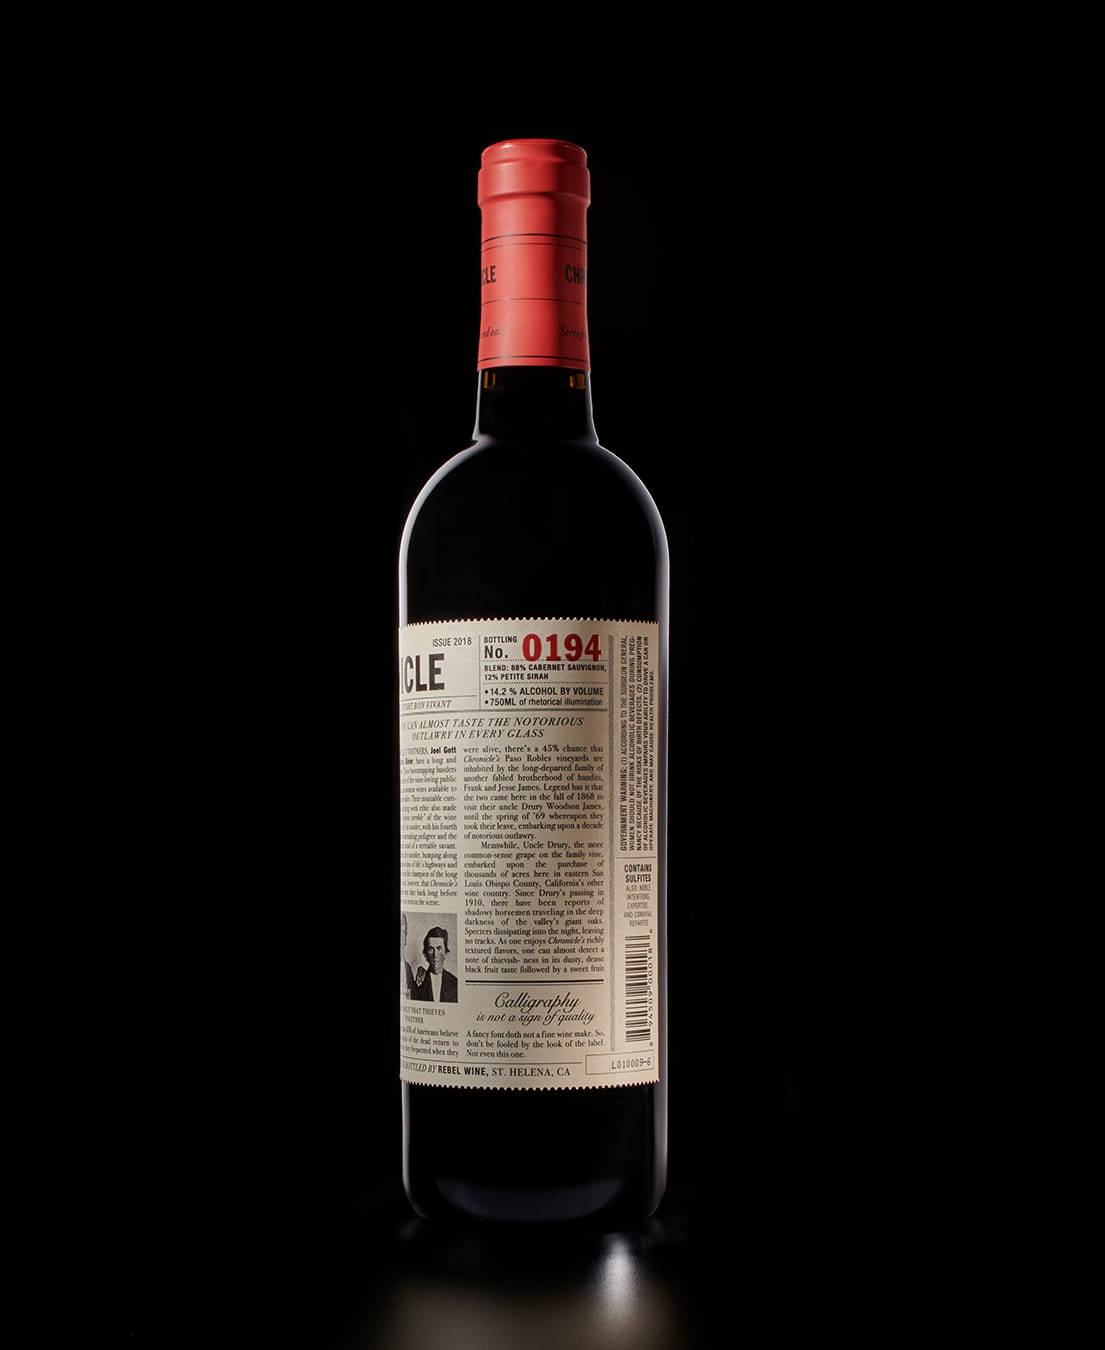 Chronicle Wine bottle label design